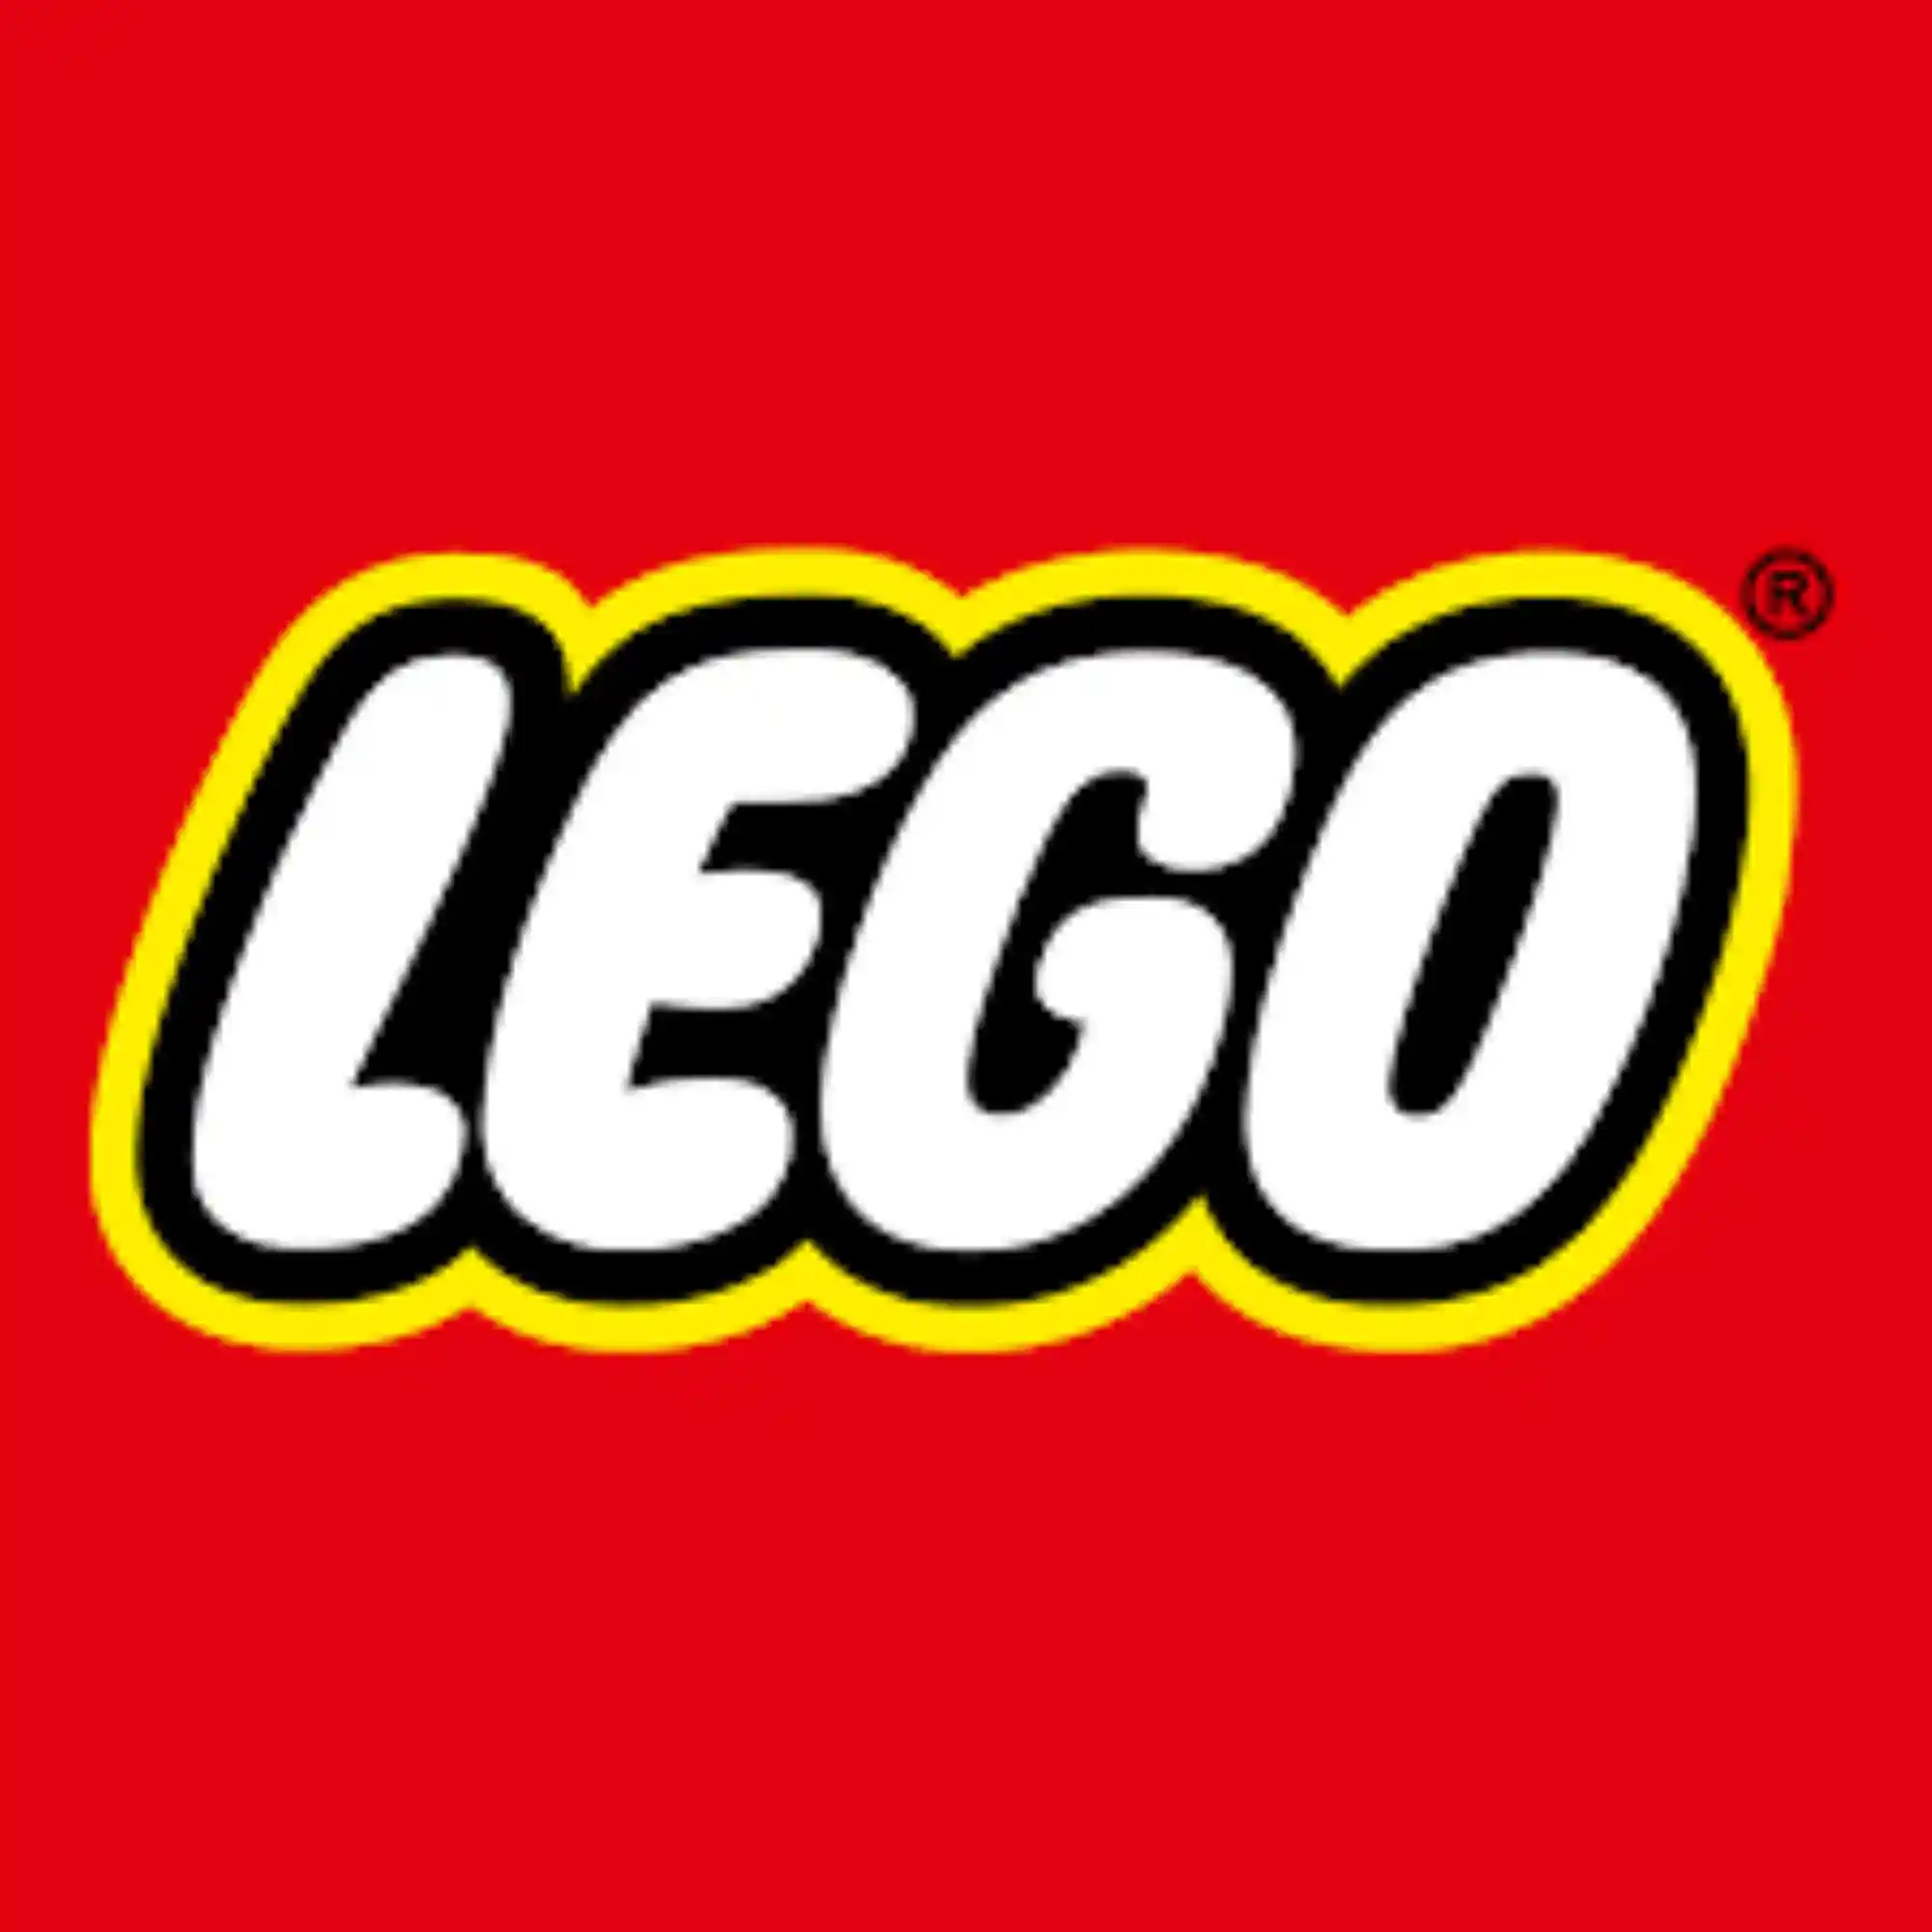 Lego giocattoli offerte